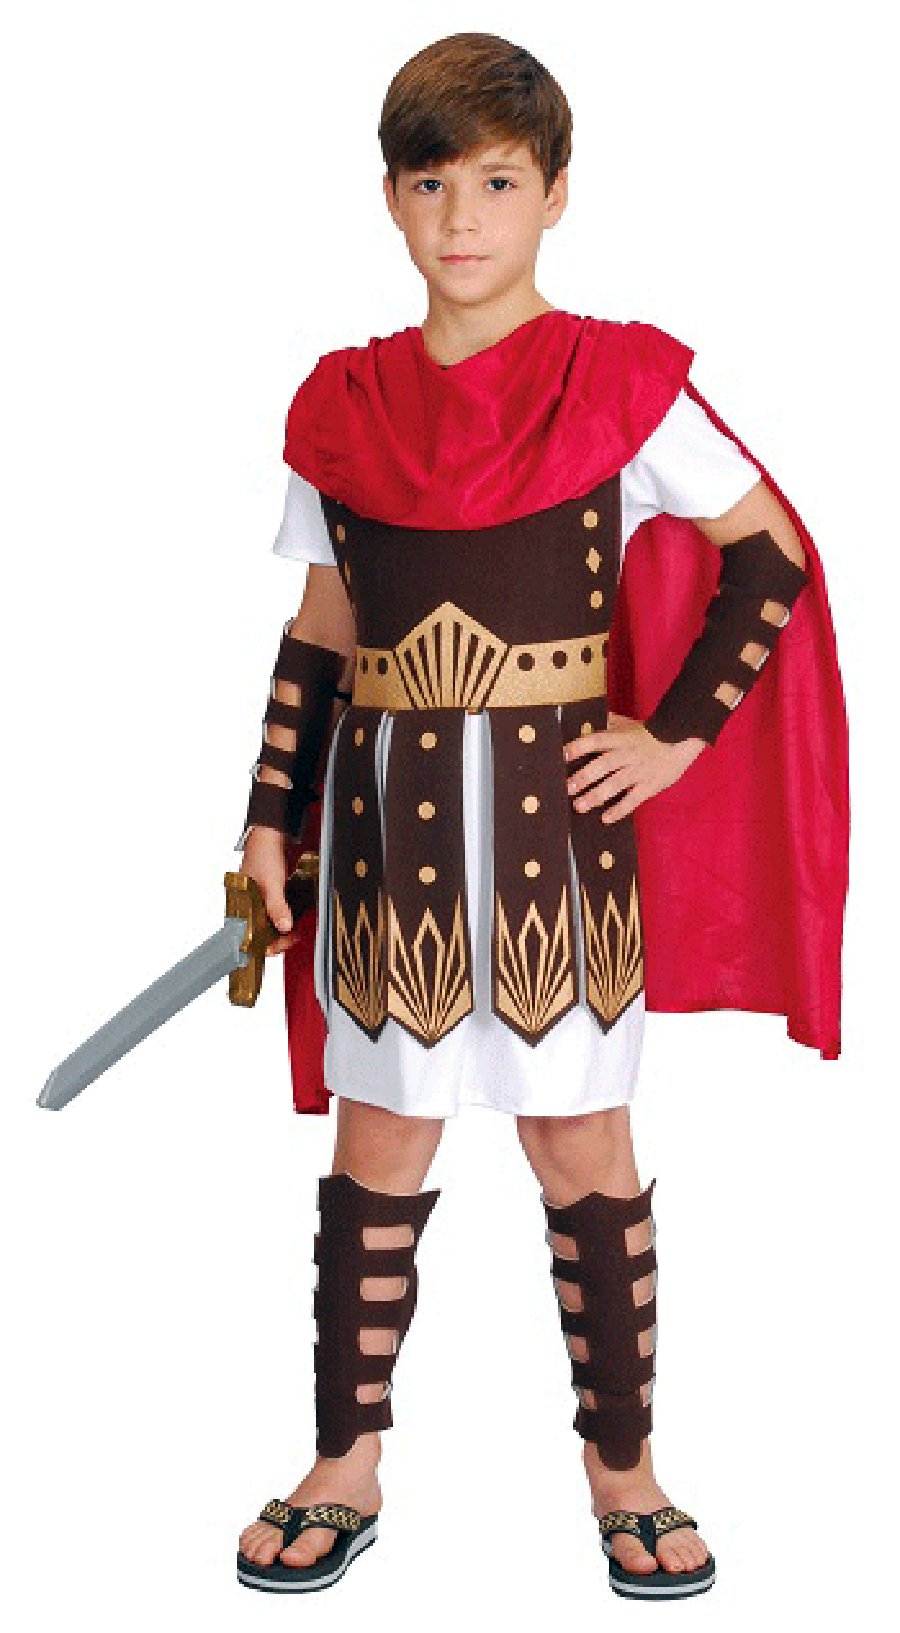 Costume Child Roman Gladiator